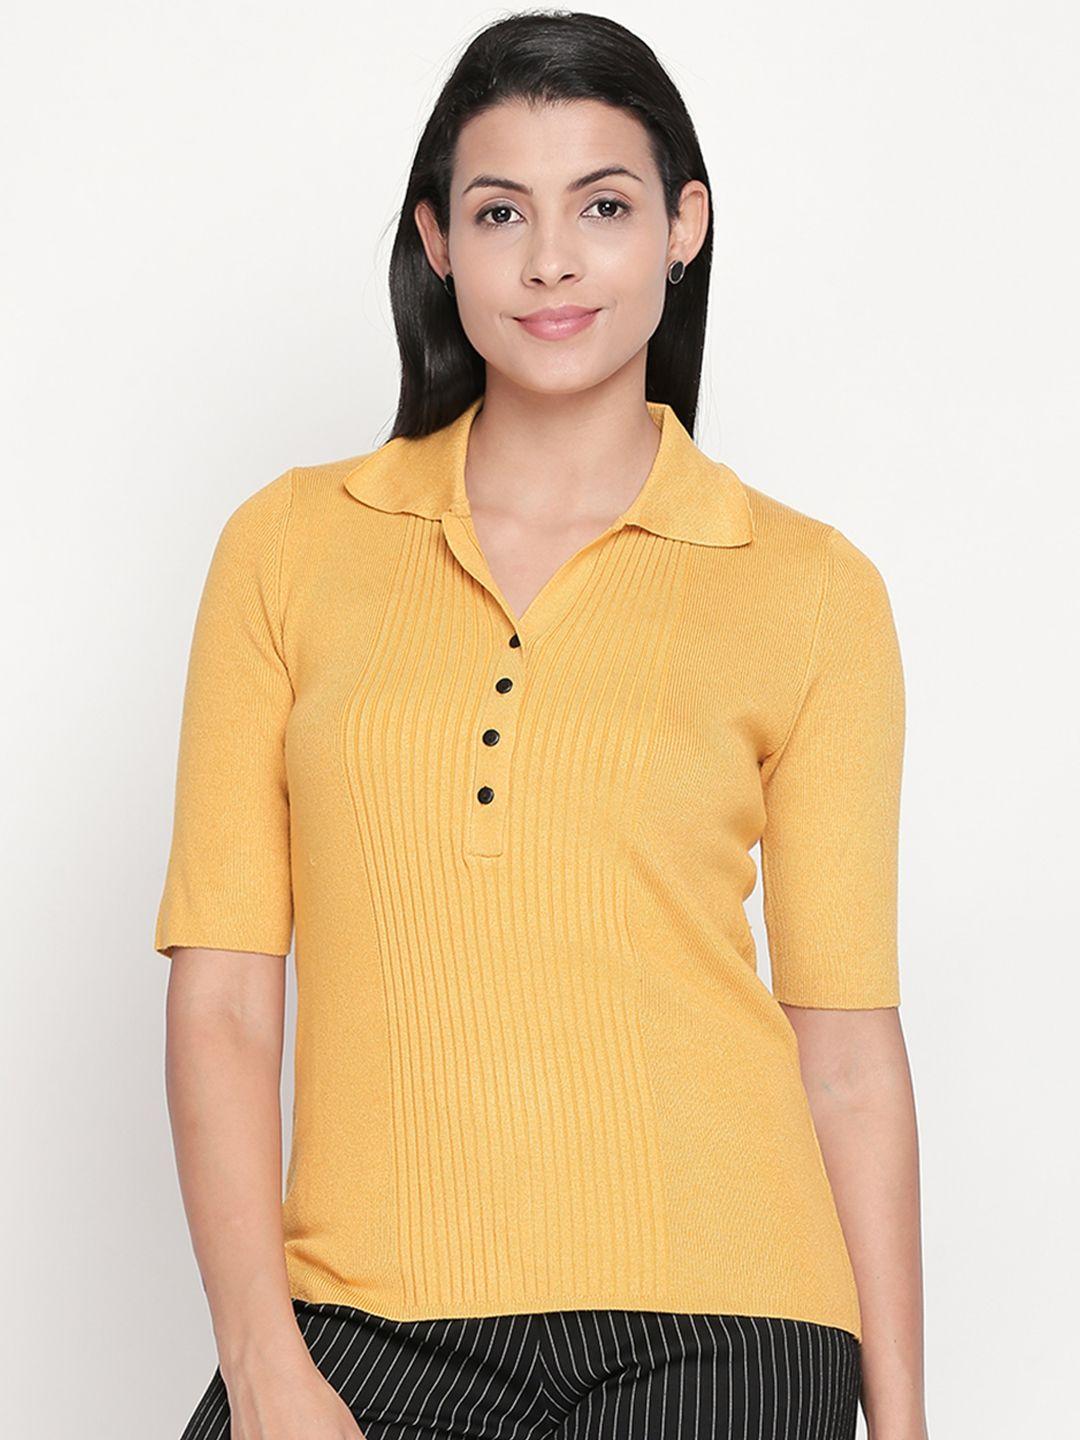 annabelle by pantaloons women mustard yellow self design sweater